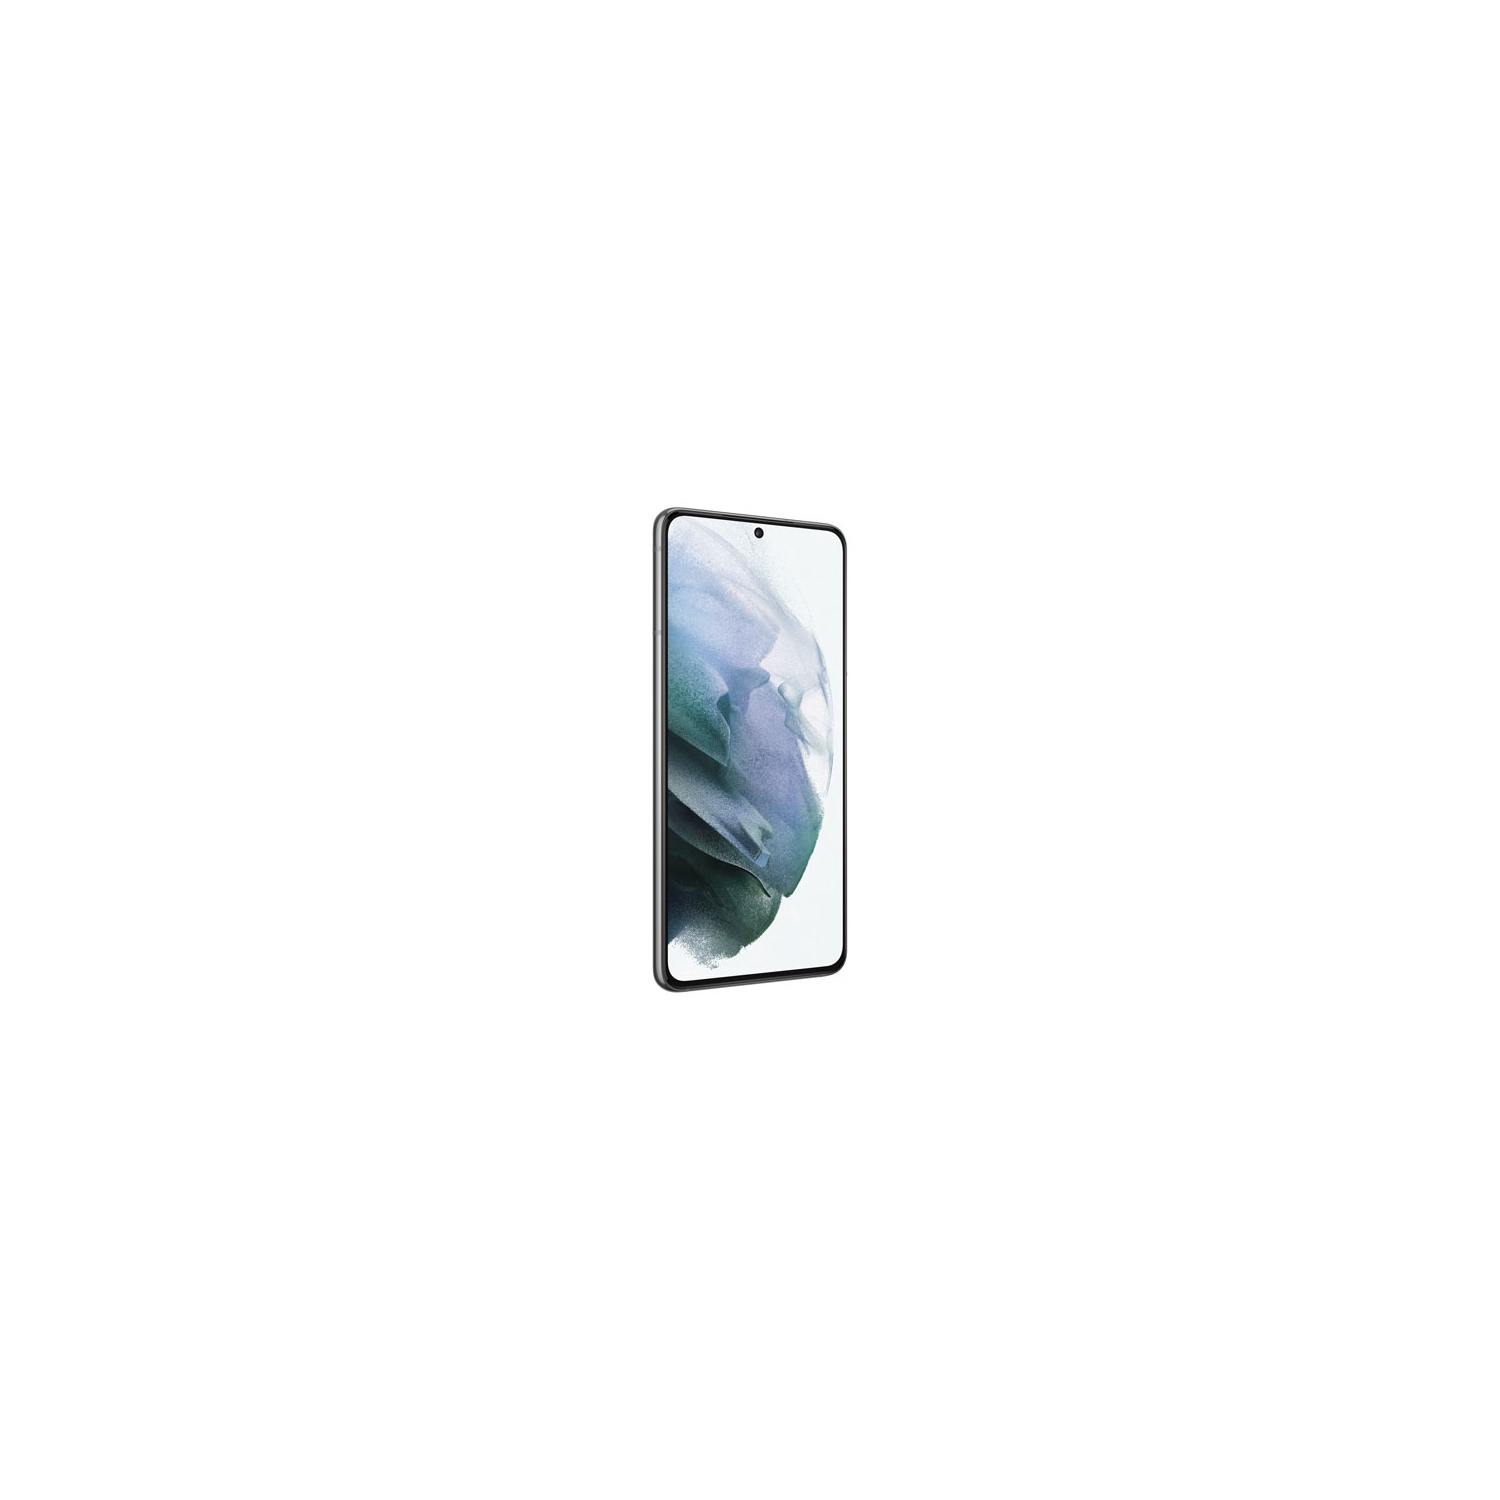 Refurbished (Fair) - Samsung Galaxy S21 256GB Smartphone - Phantom Grey - Unlocked